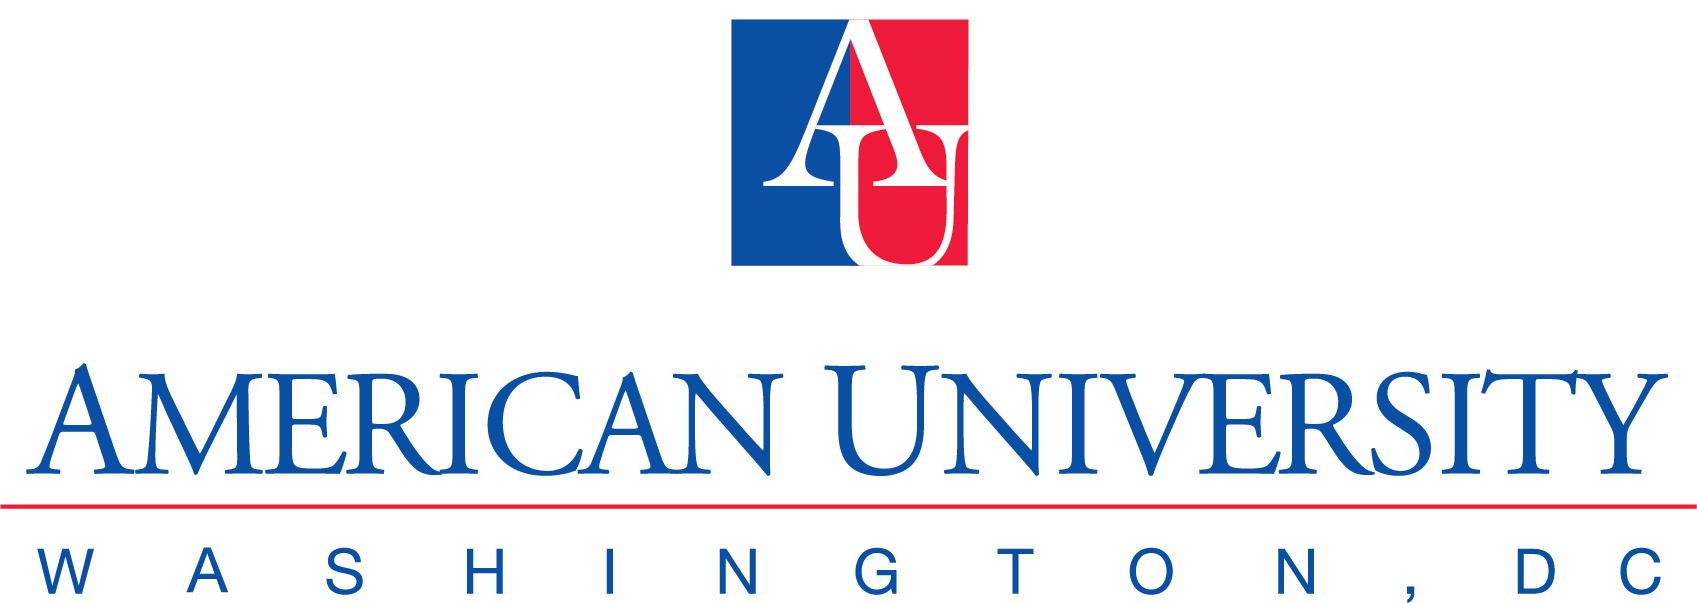 AU icon above American University, red rule separator, Washington, D.C.